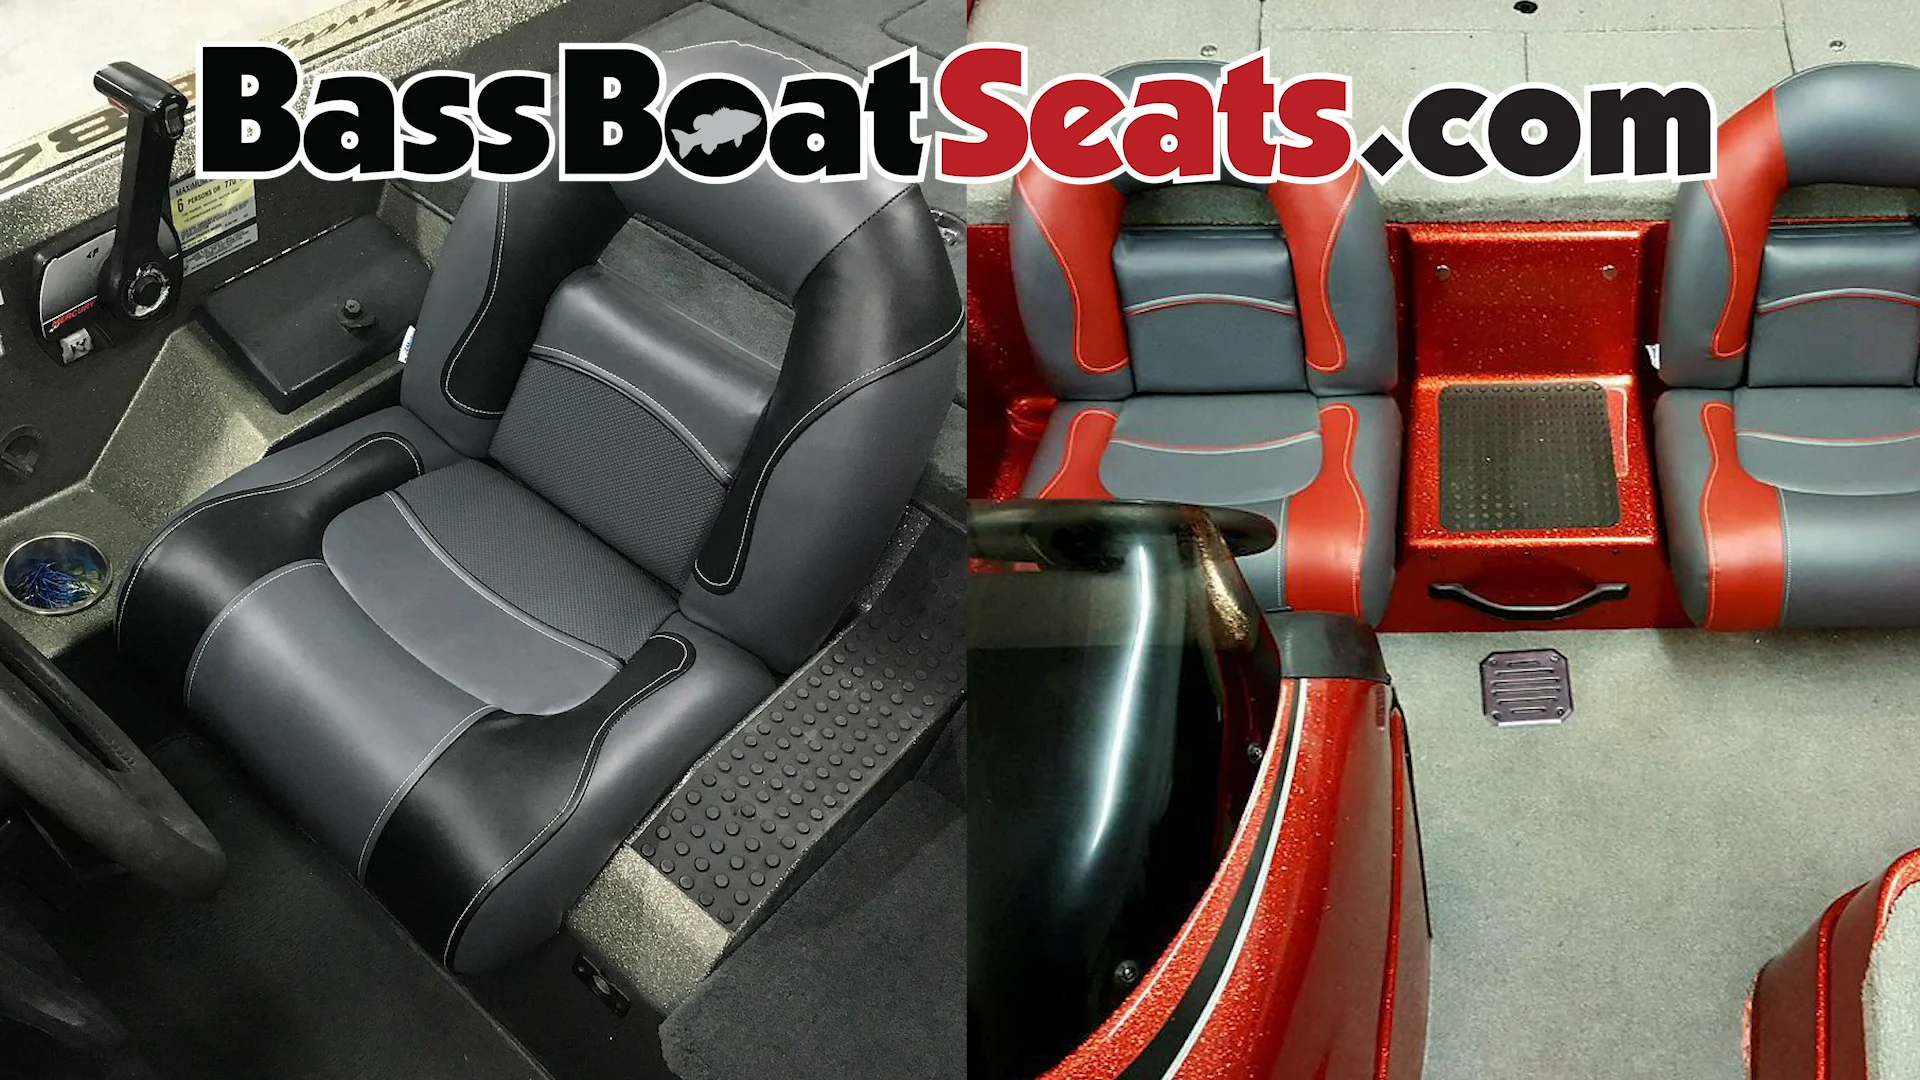 How to Measure for Seats  BassBoatSeats.com on Vimeo